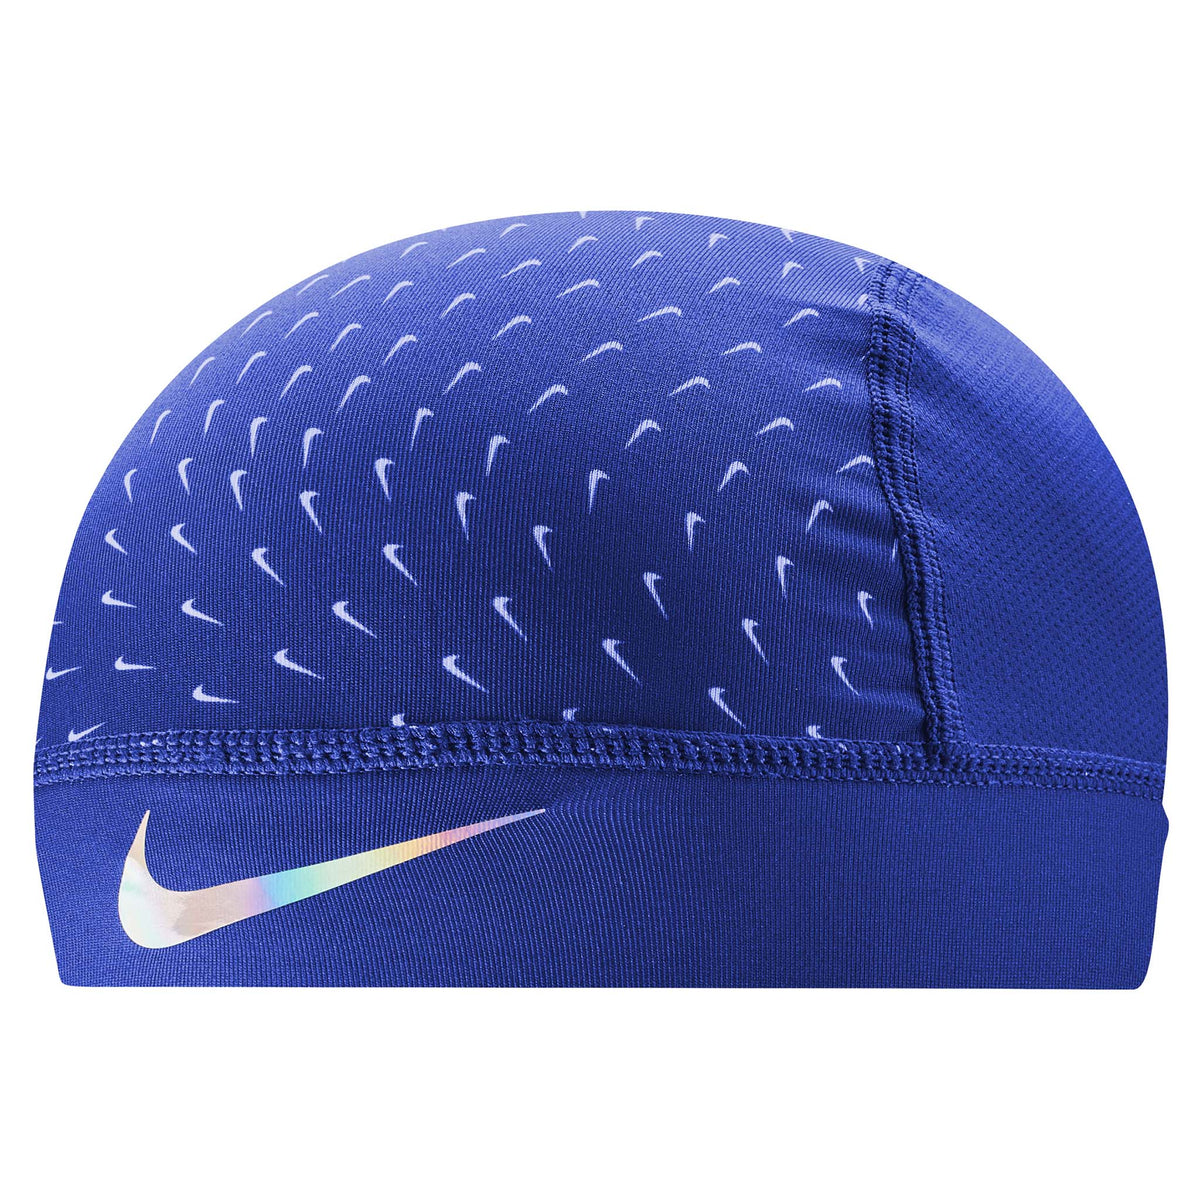 Nike Pro Cooling Skull Cap bonnet sport de football game royal